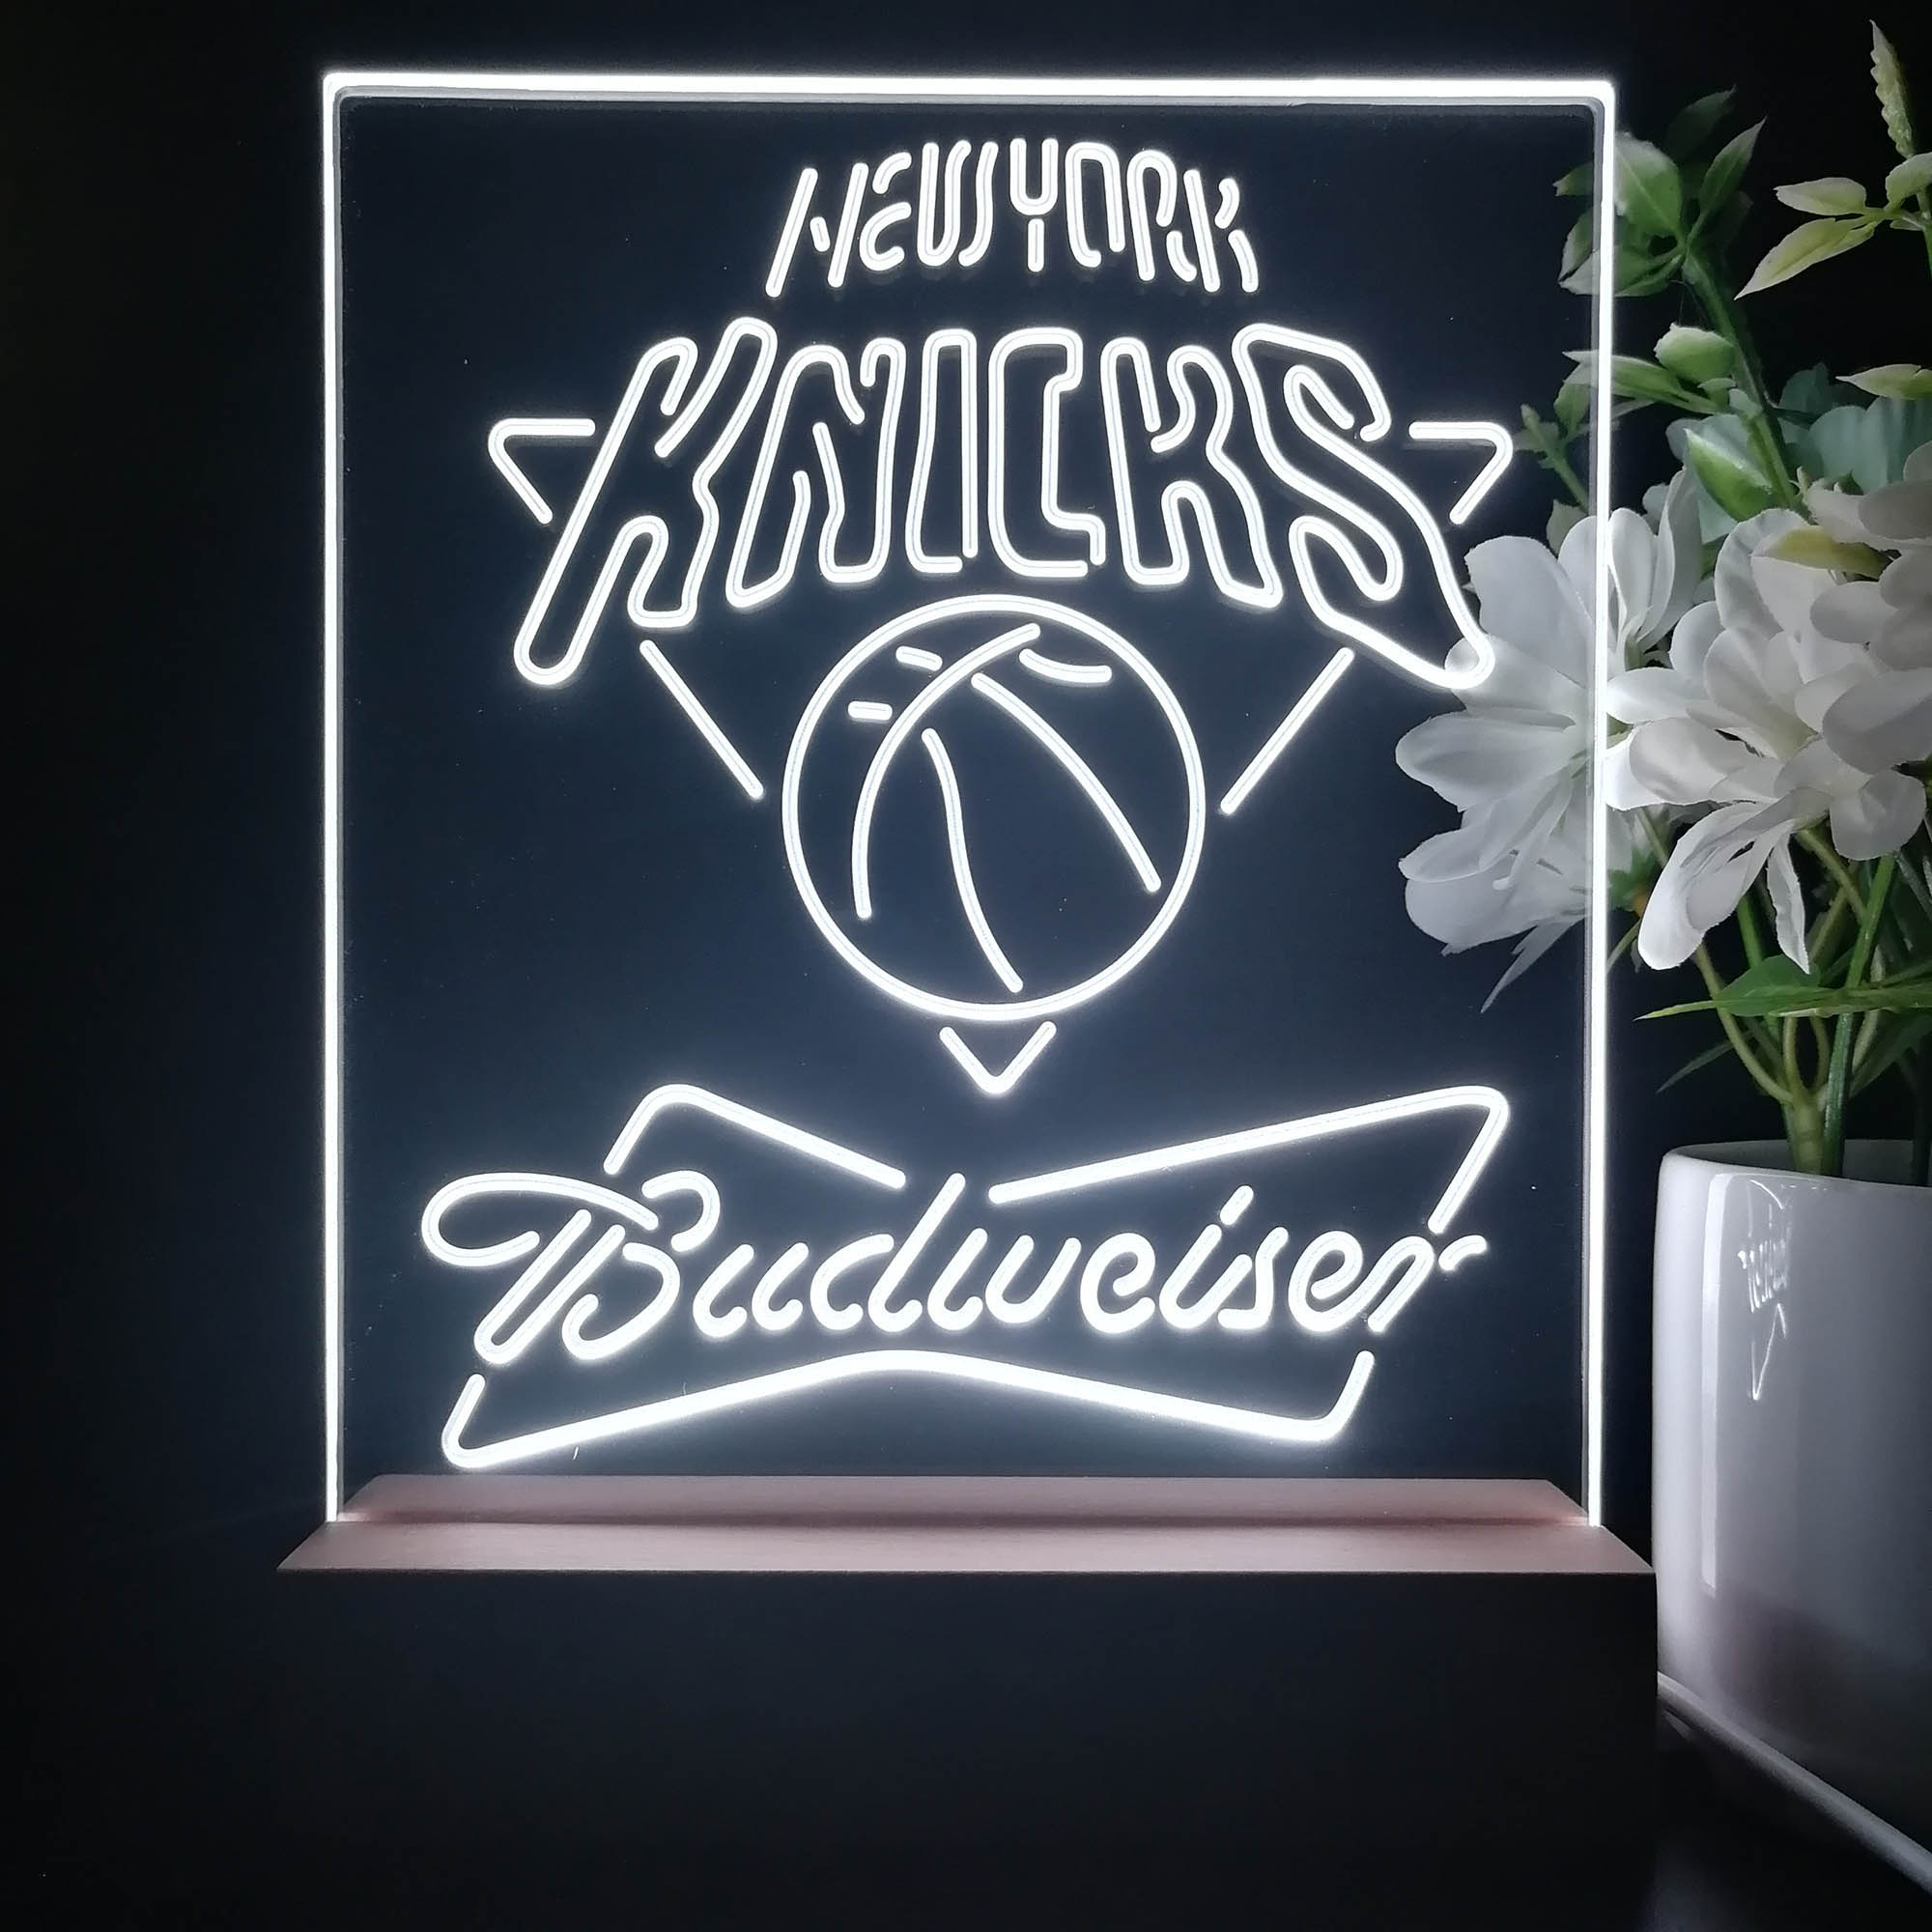 New York Knicks Budweiser Neon Sign Pub Bar Lamp